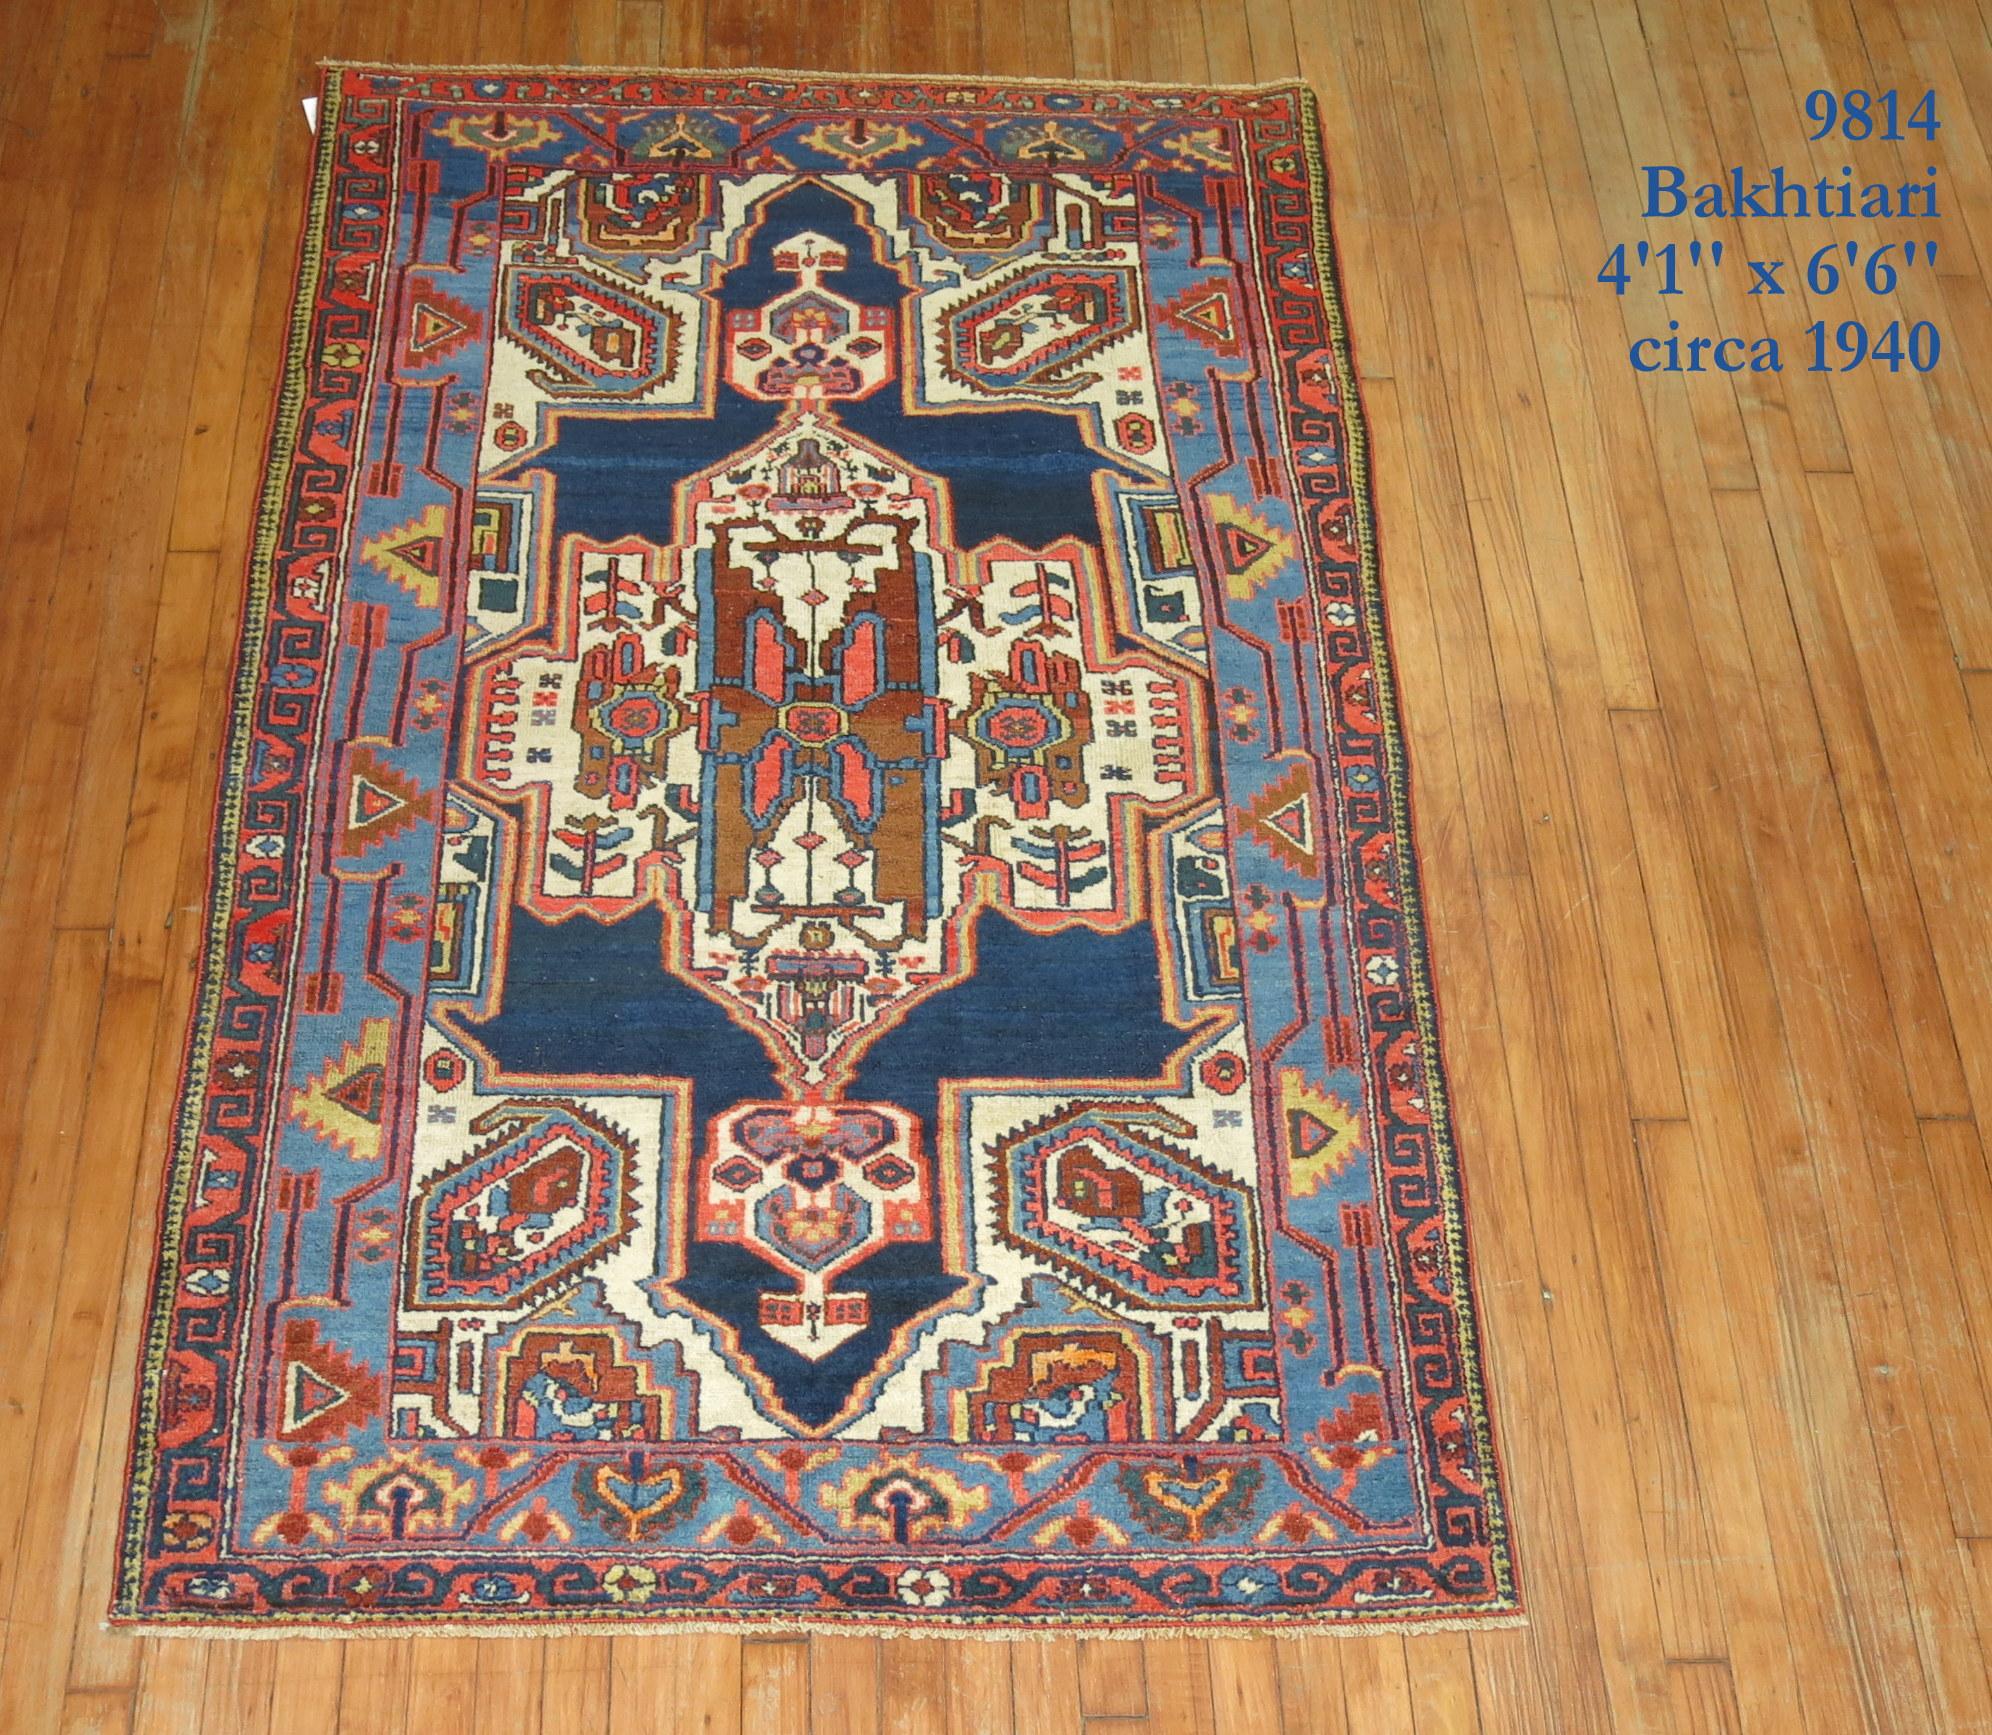 A traditional colorful Persian Bakhtiari rug,

circa 1940. Measures: 4'1